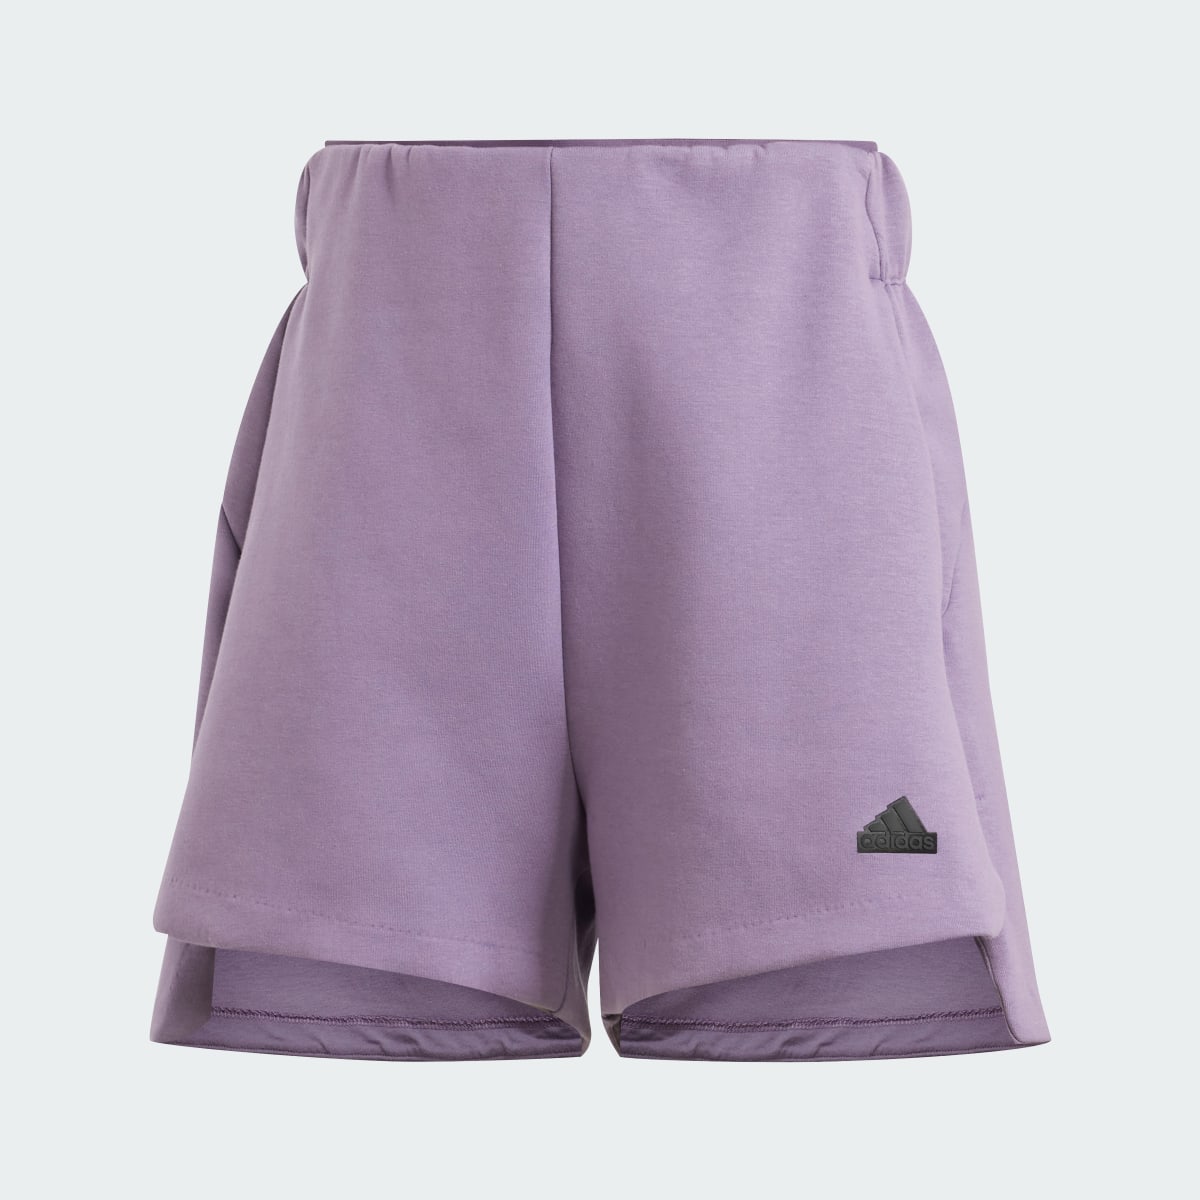 Adidas Z.N.E. Shorts. 4